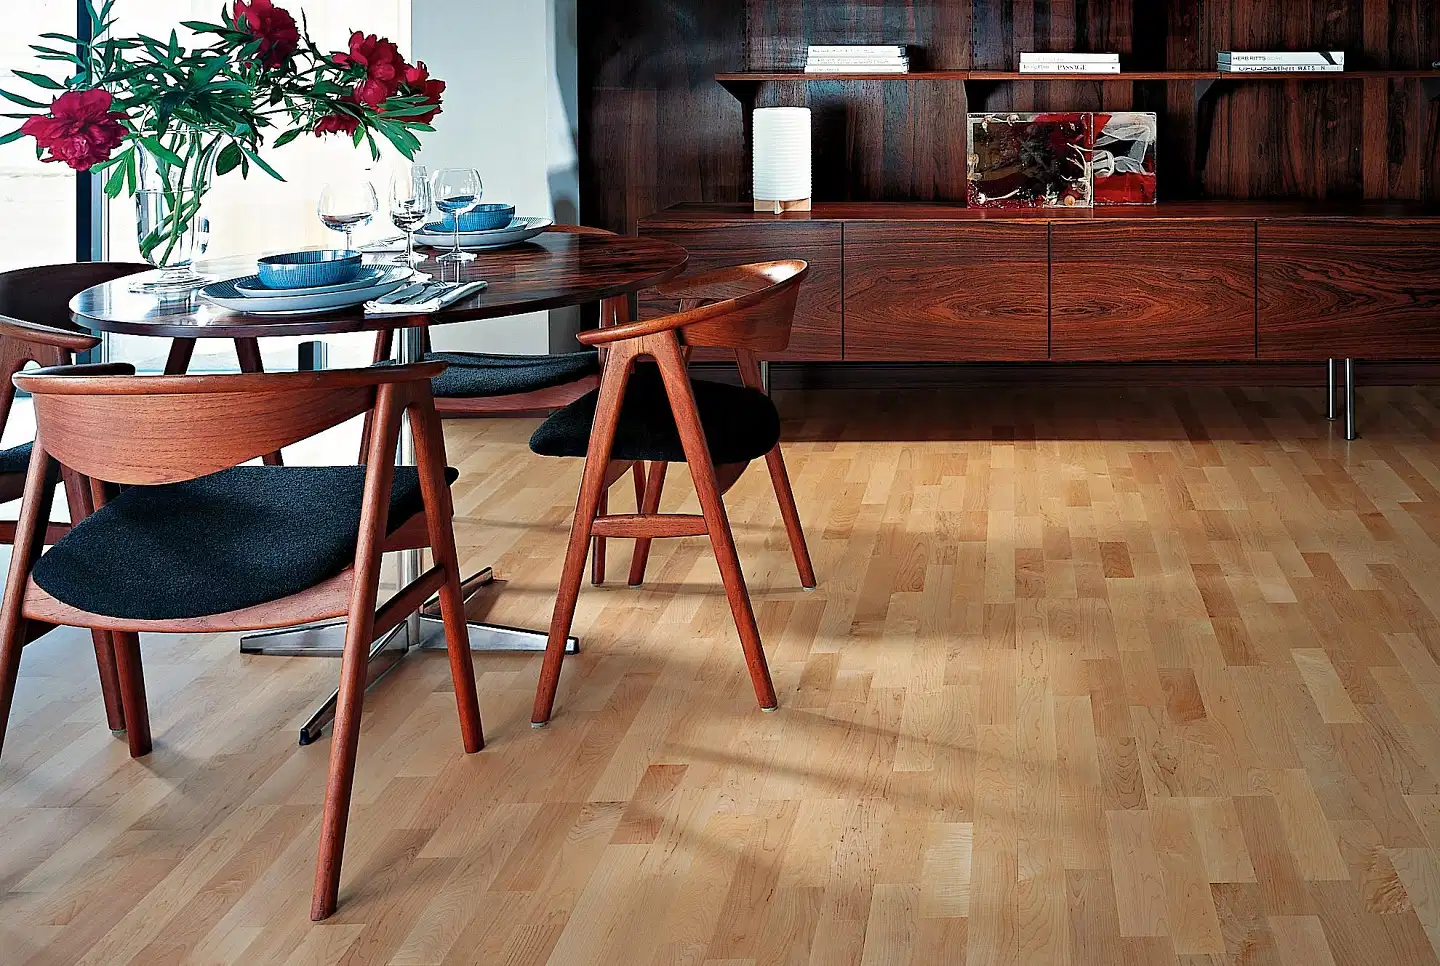 Aesthetic Appeal of Maple Flooring